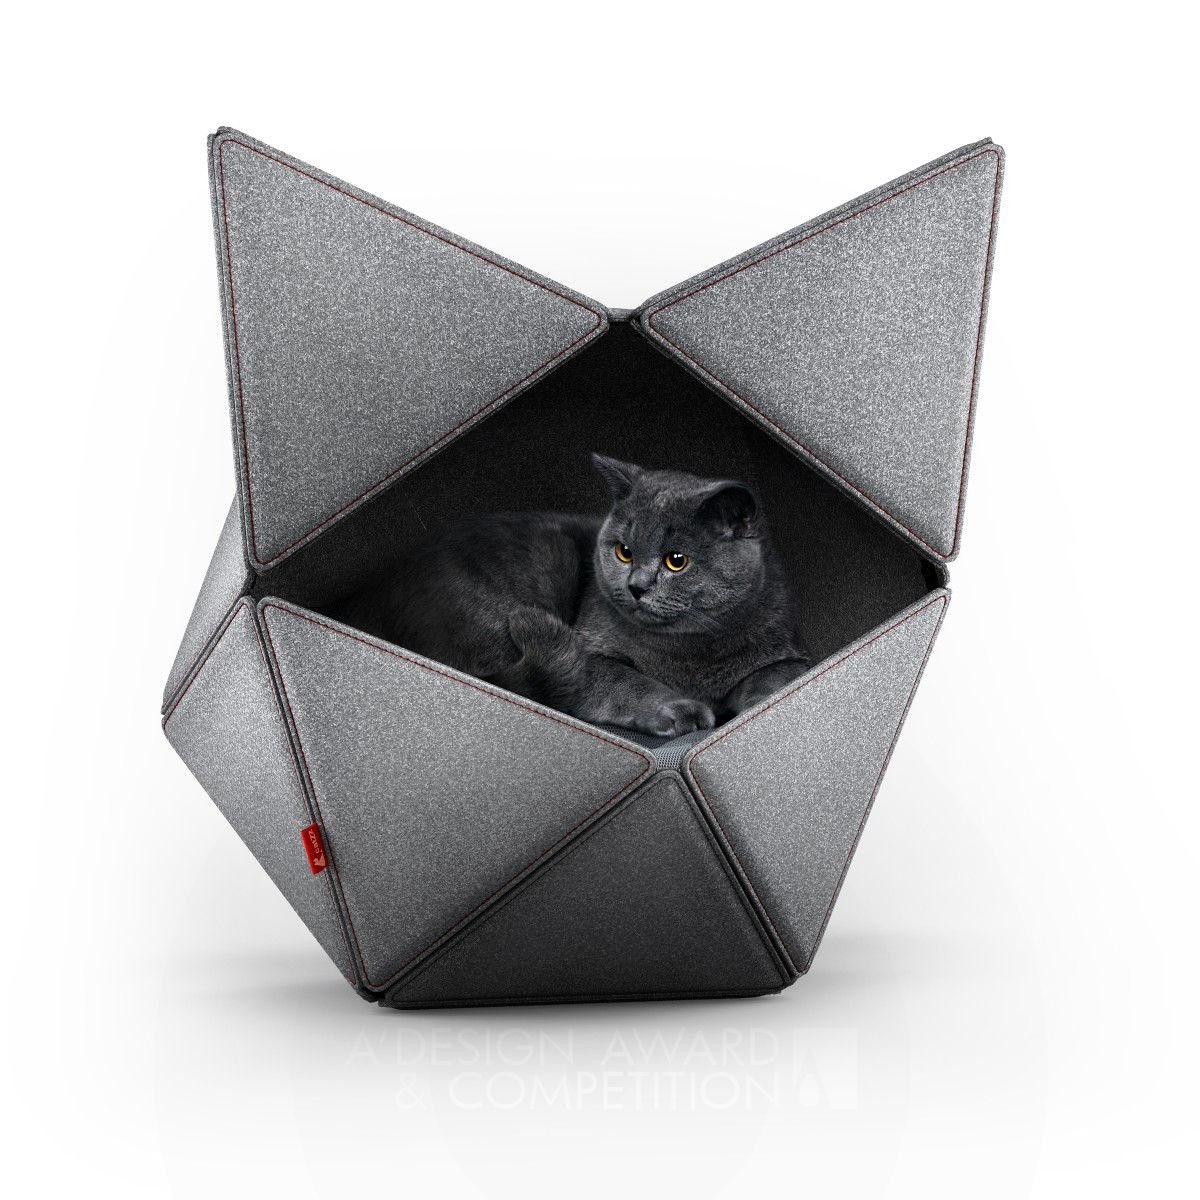 Catzz: A Revolutionary Approach to Cat Beds